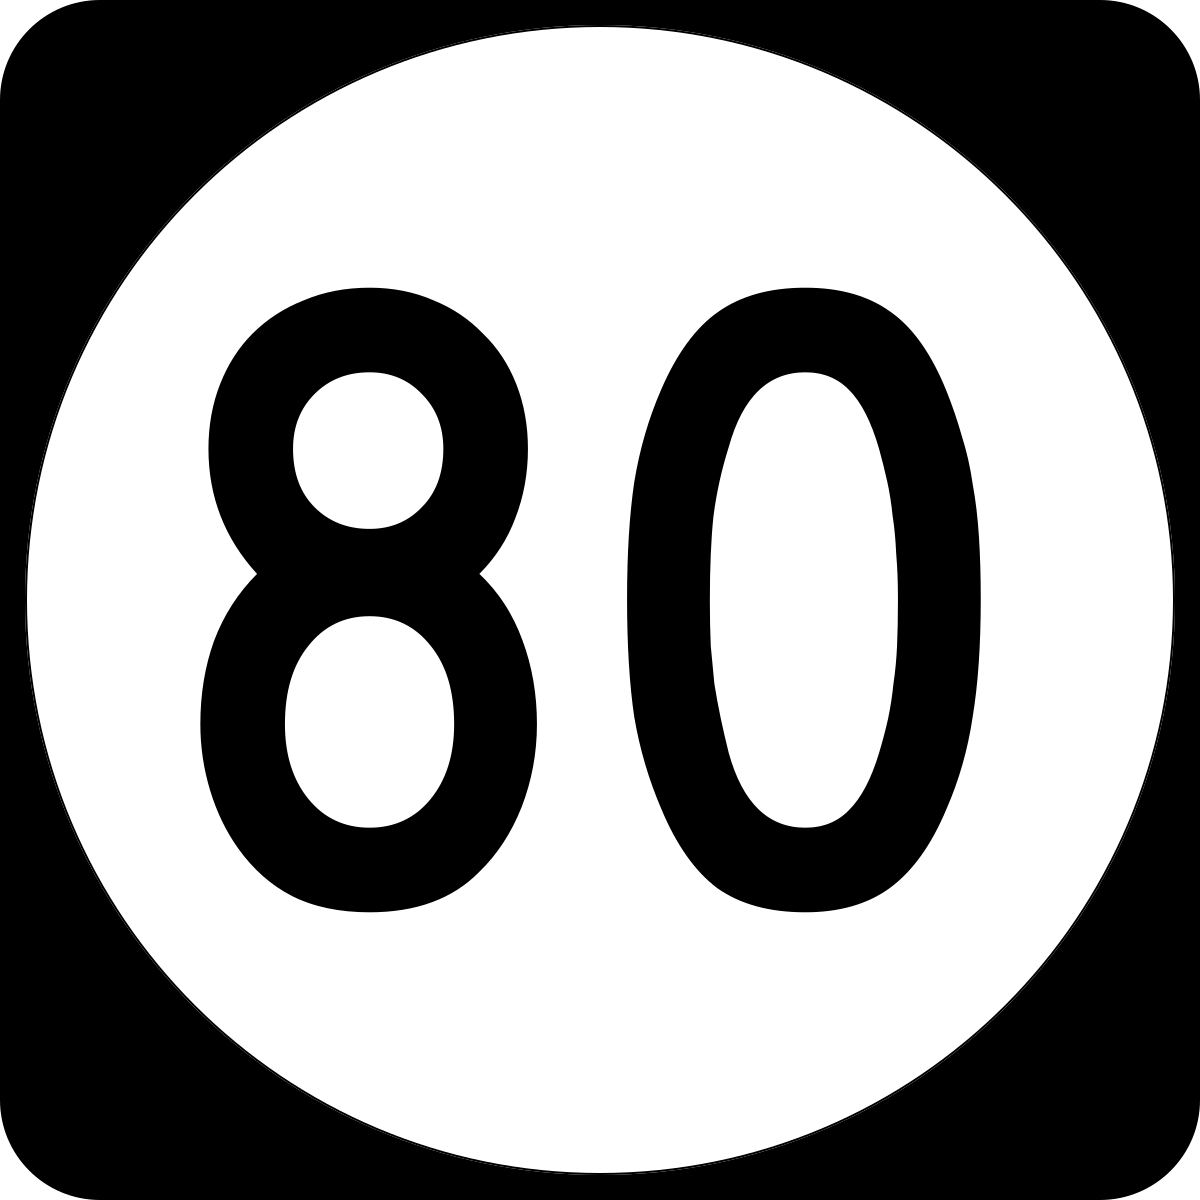 Kentucky Route 80 - Wikipedia